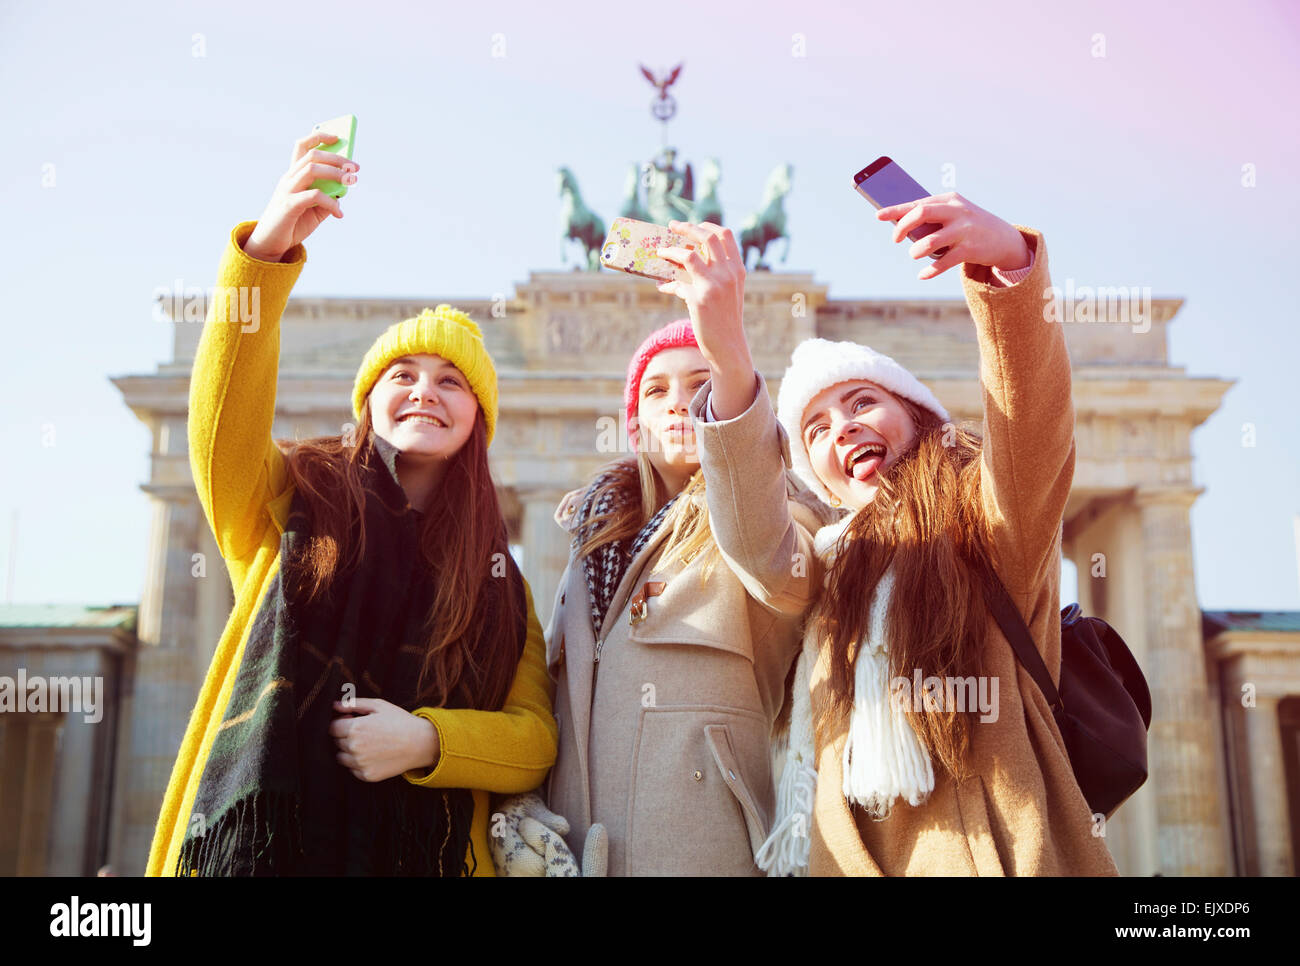 teenage-girls-taking-selfie-in-front-of-